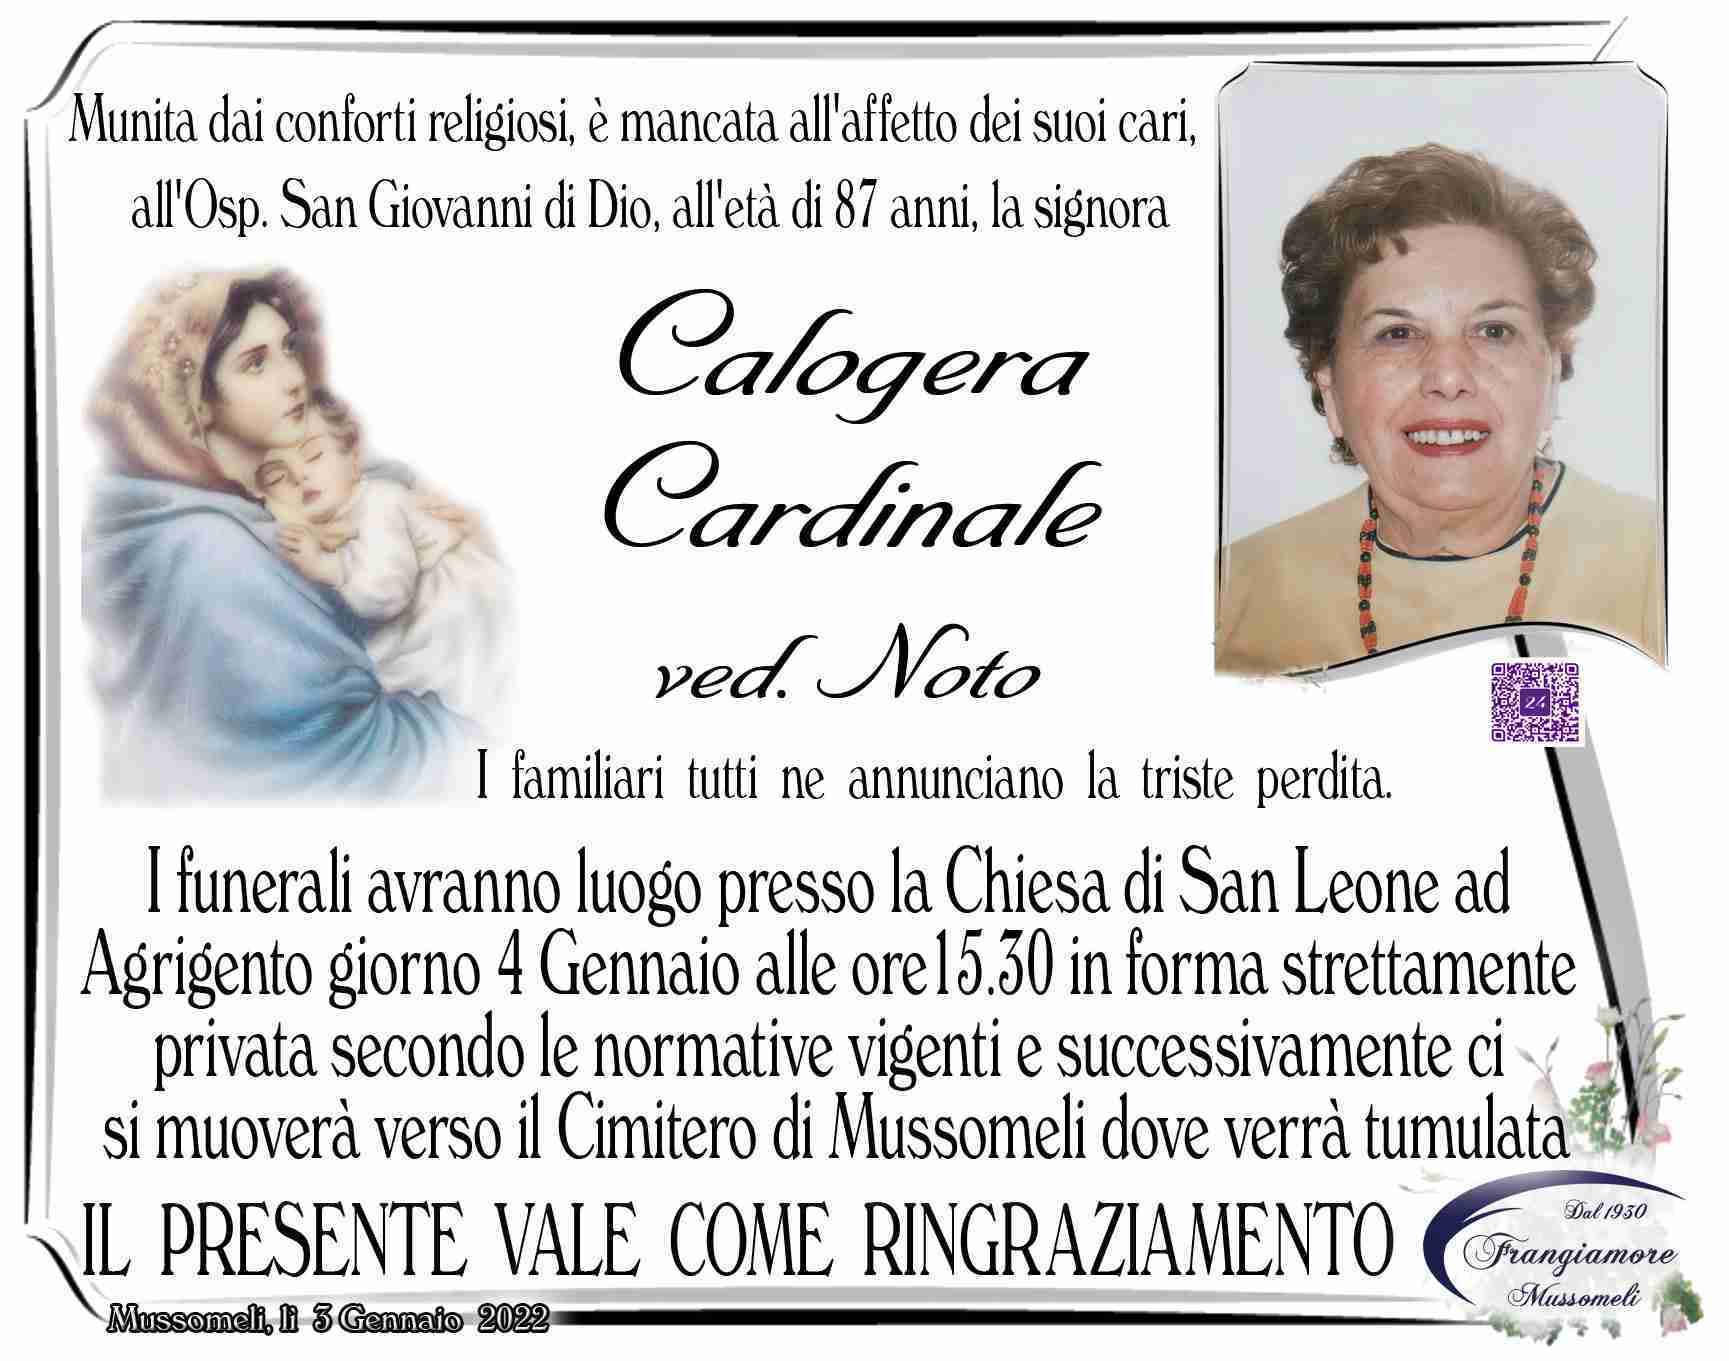 Calogera Cardinale